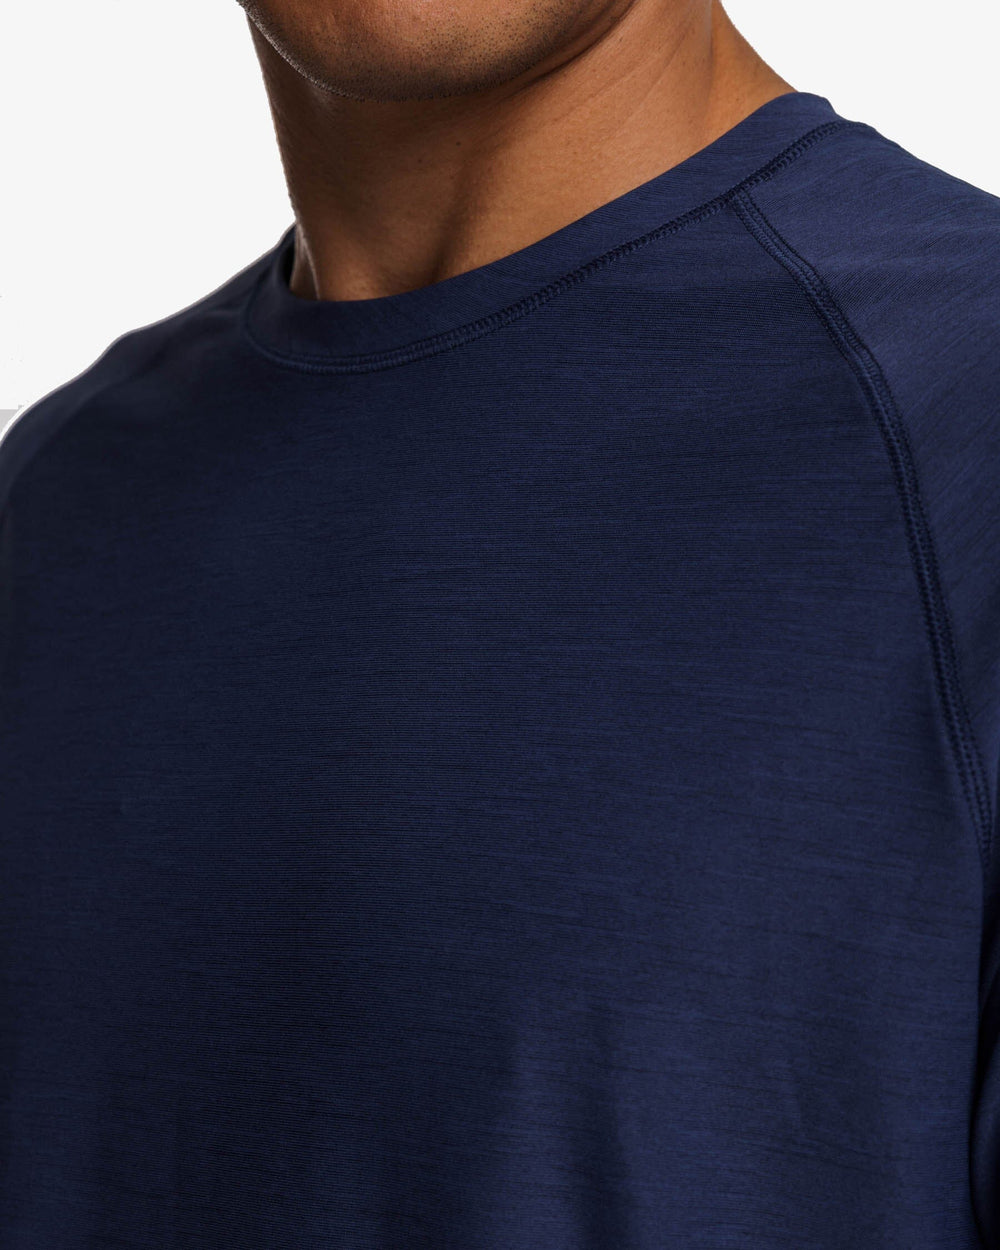 brrr°®-illiant Performance Long Sleeve T-Shirt